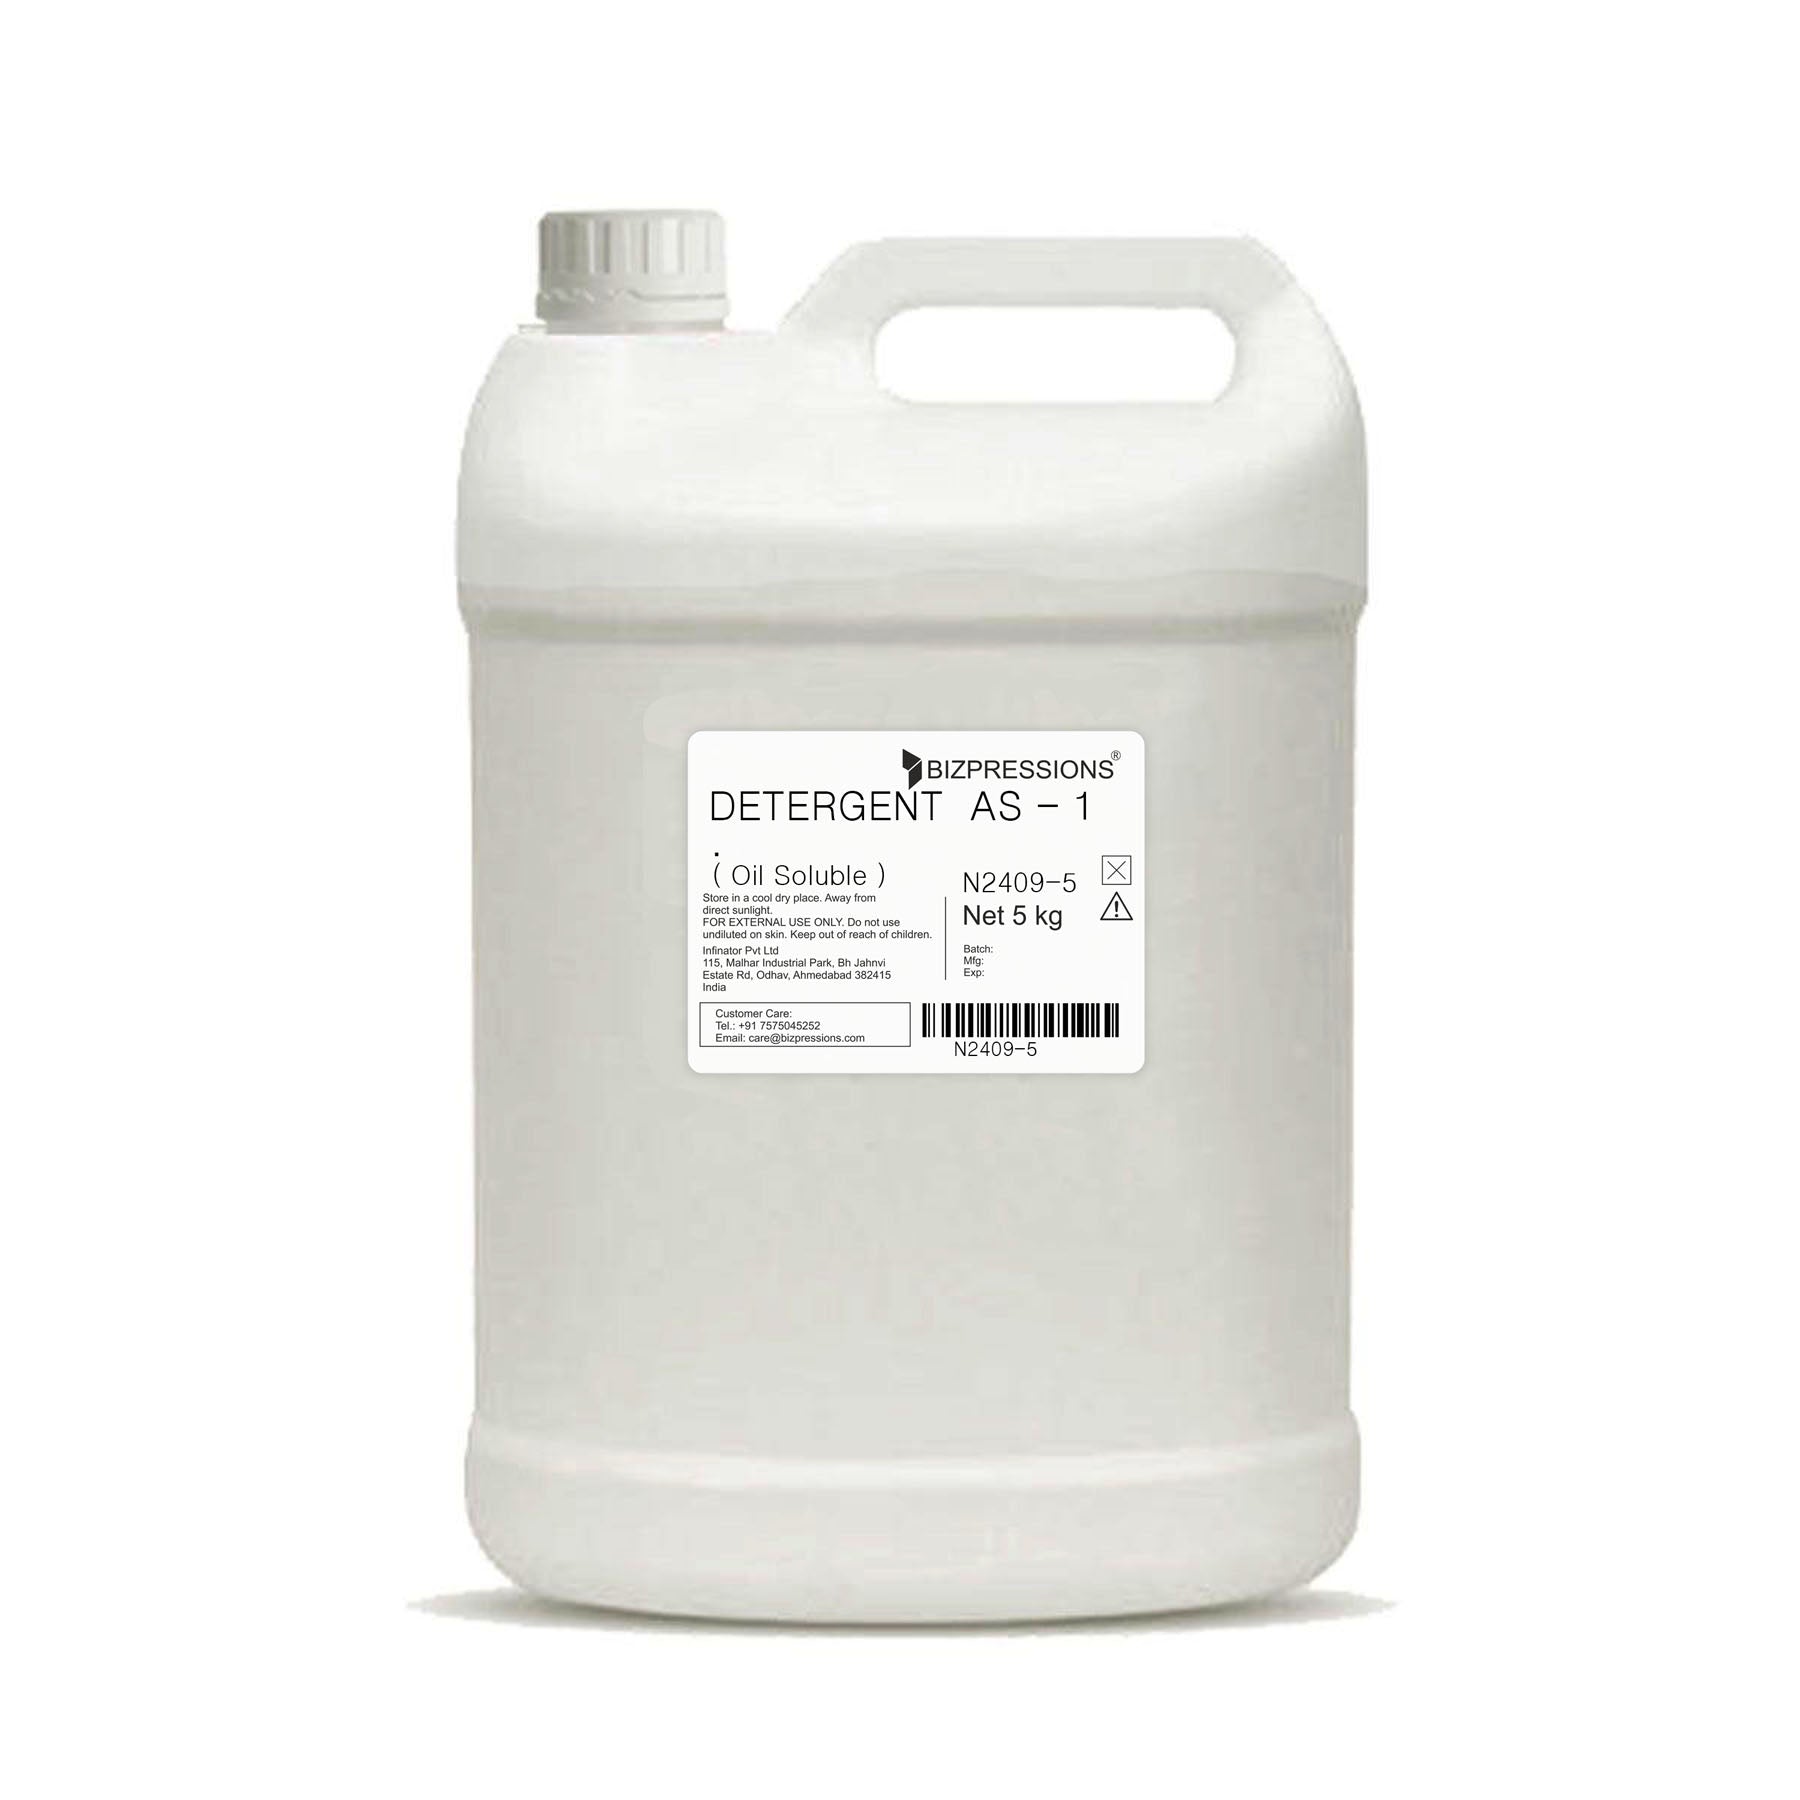 DETERGENT AS - 1 - Fragrance ( Oil Soluble ) - 5 kg